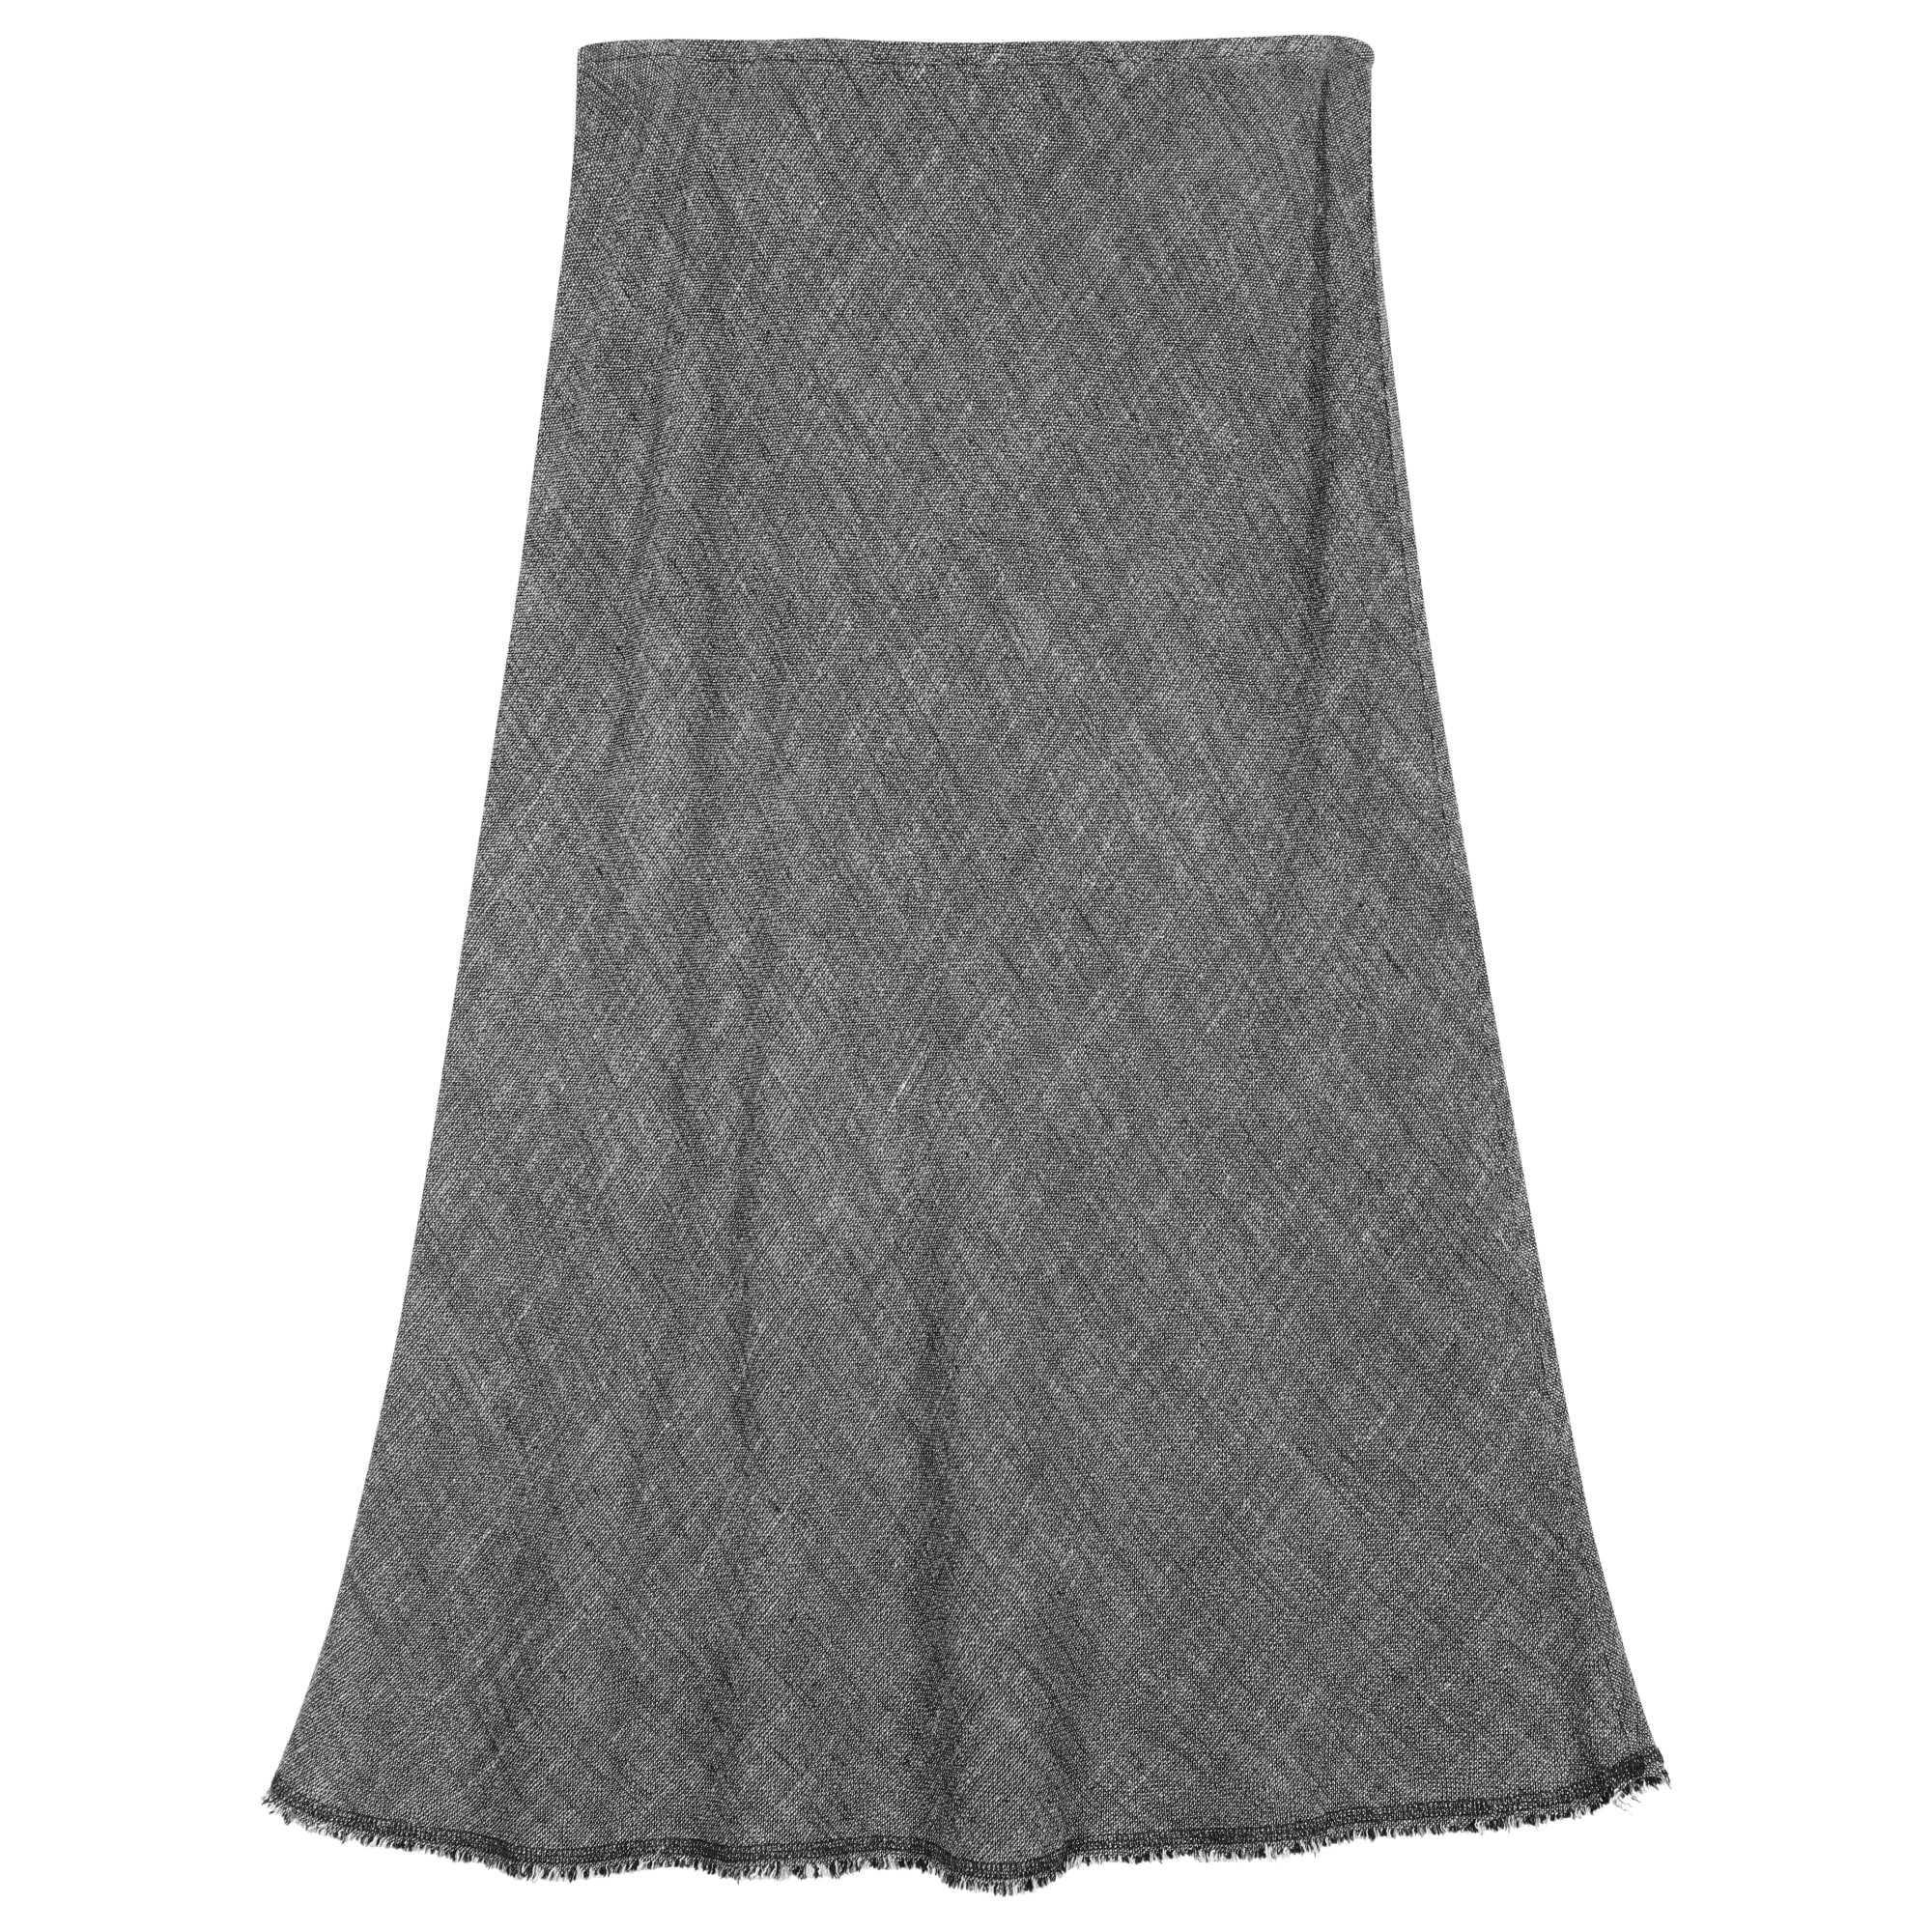 Used Linen Rayon Tweed Skirt Print/pattern | EILEEN FISHER RENEW